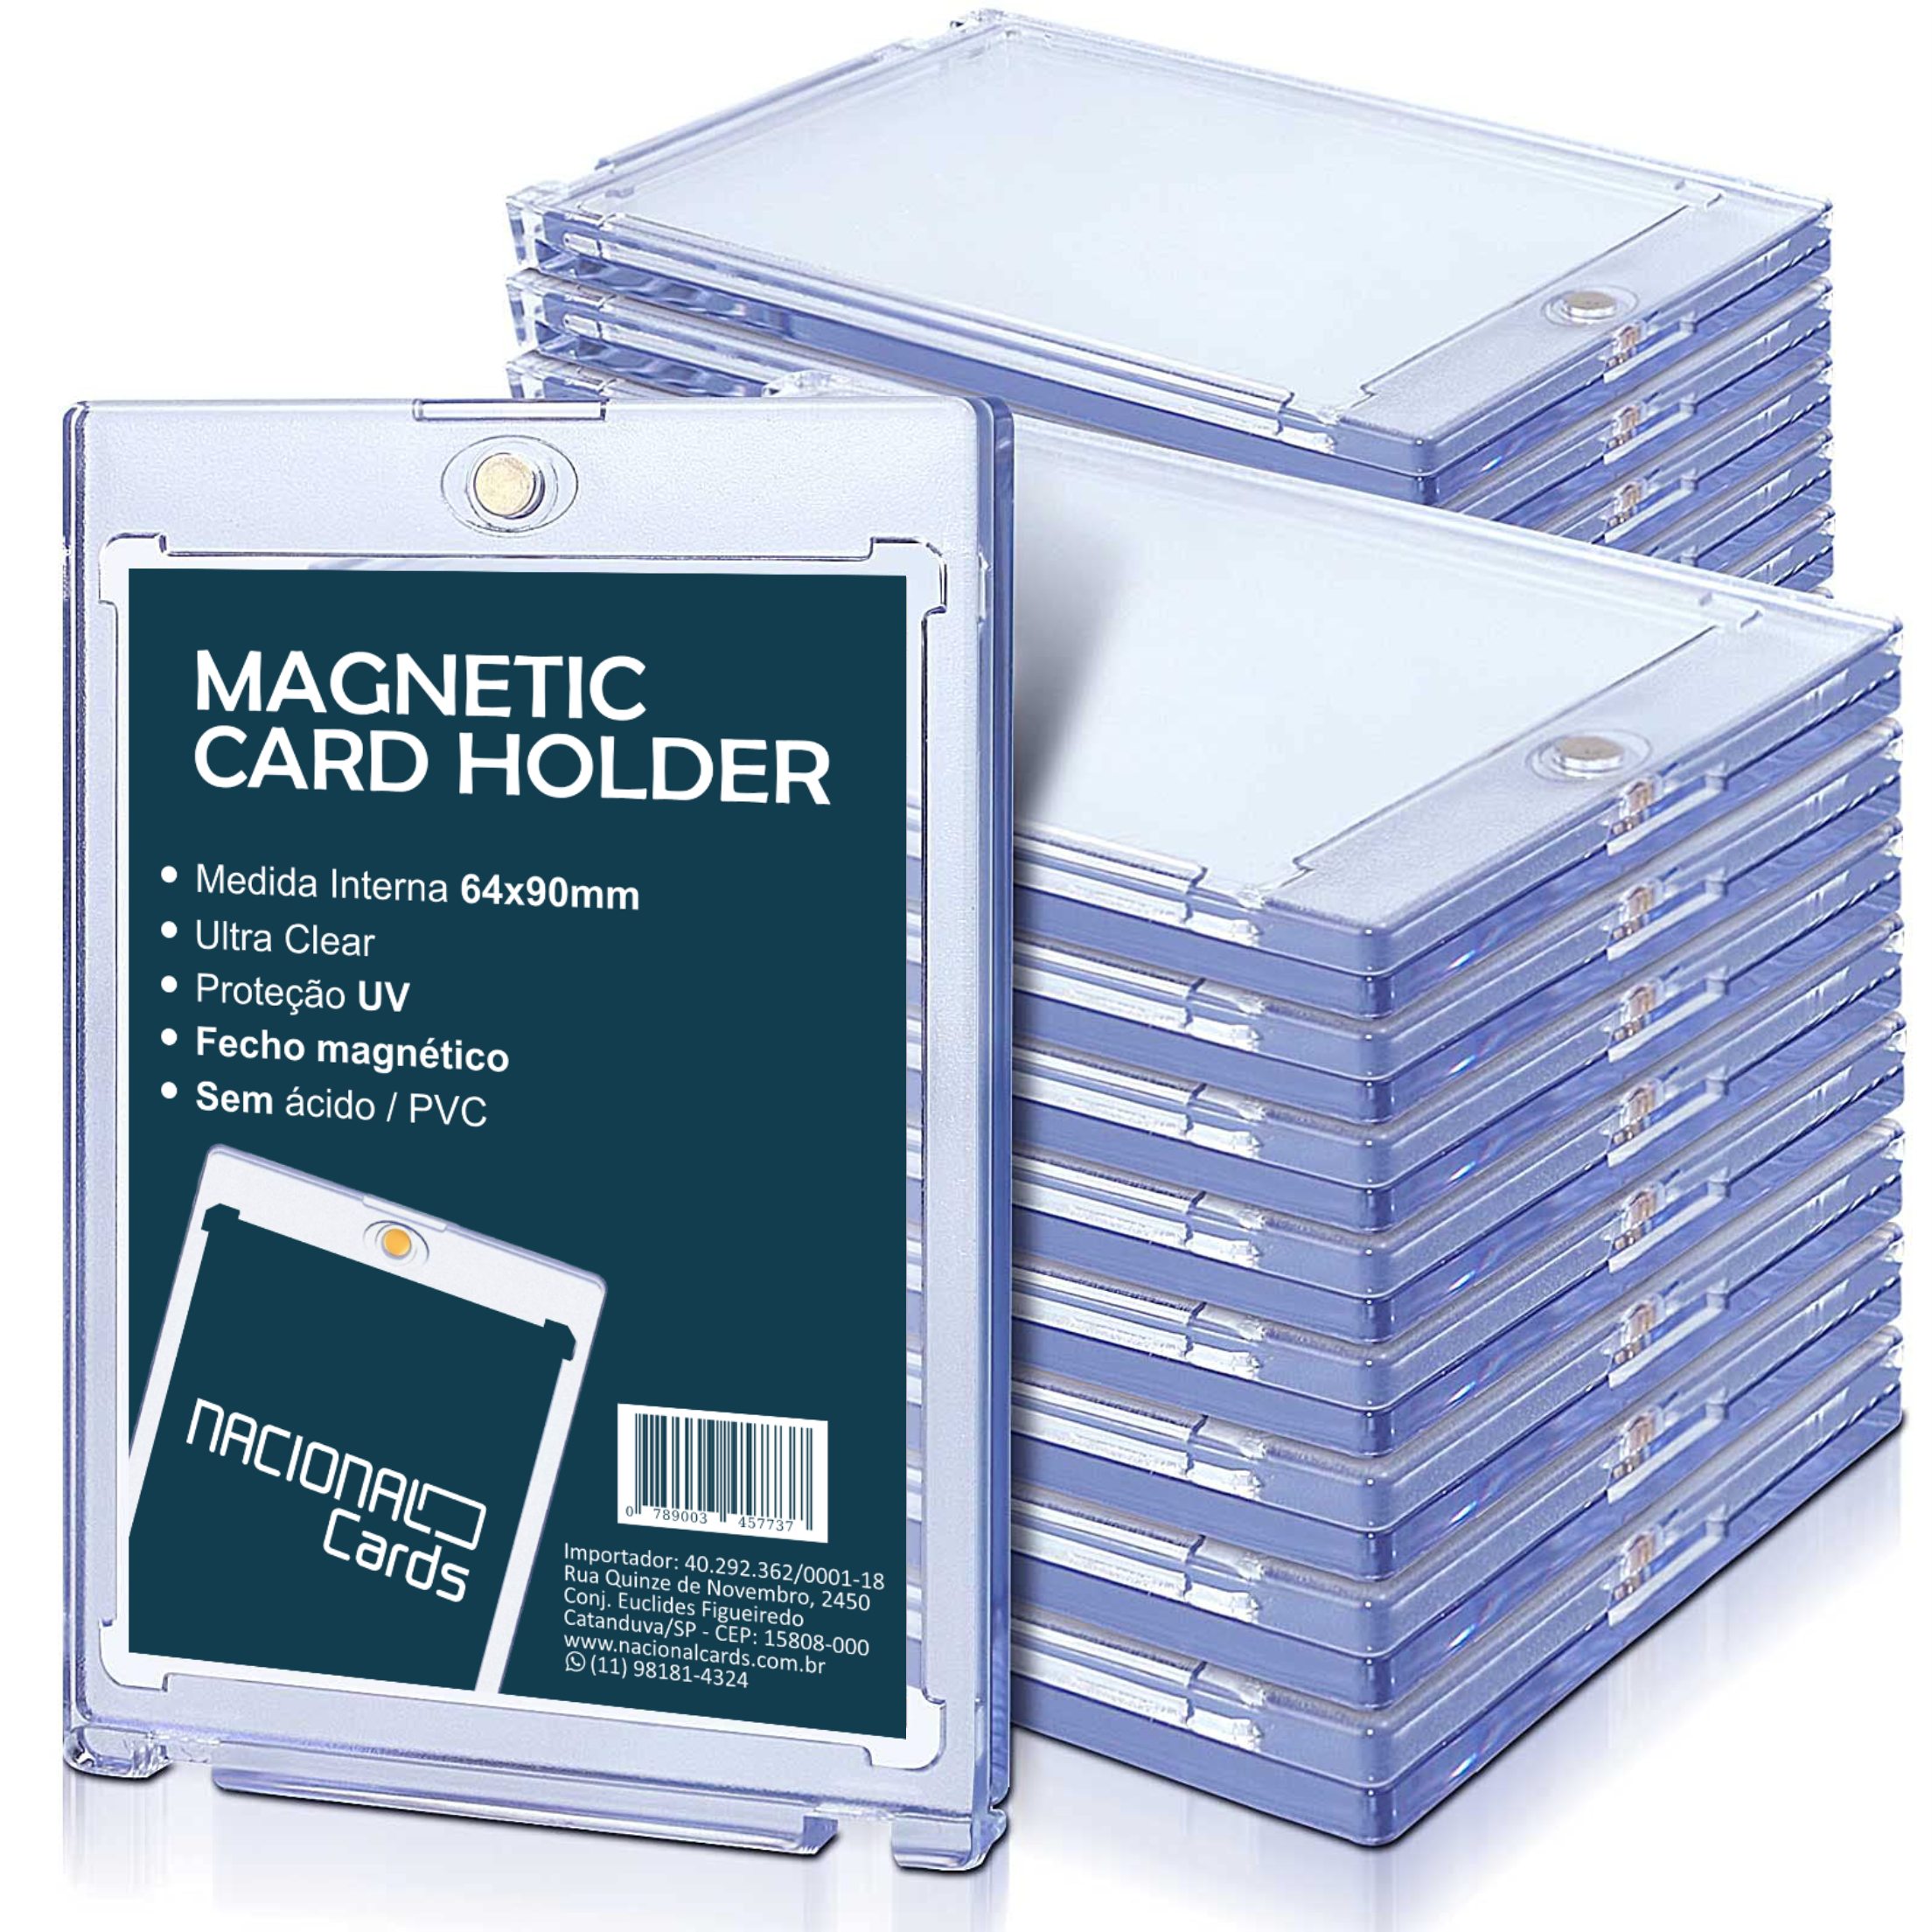 Toploader Magnético (Magnetic Card Holder) - Nacional Cards - TN GEEK